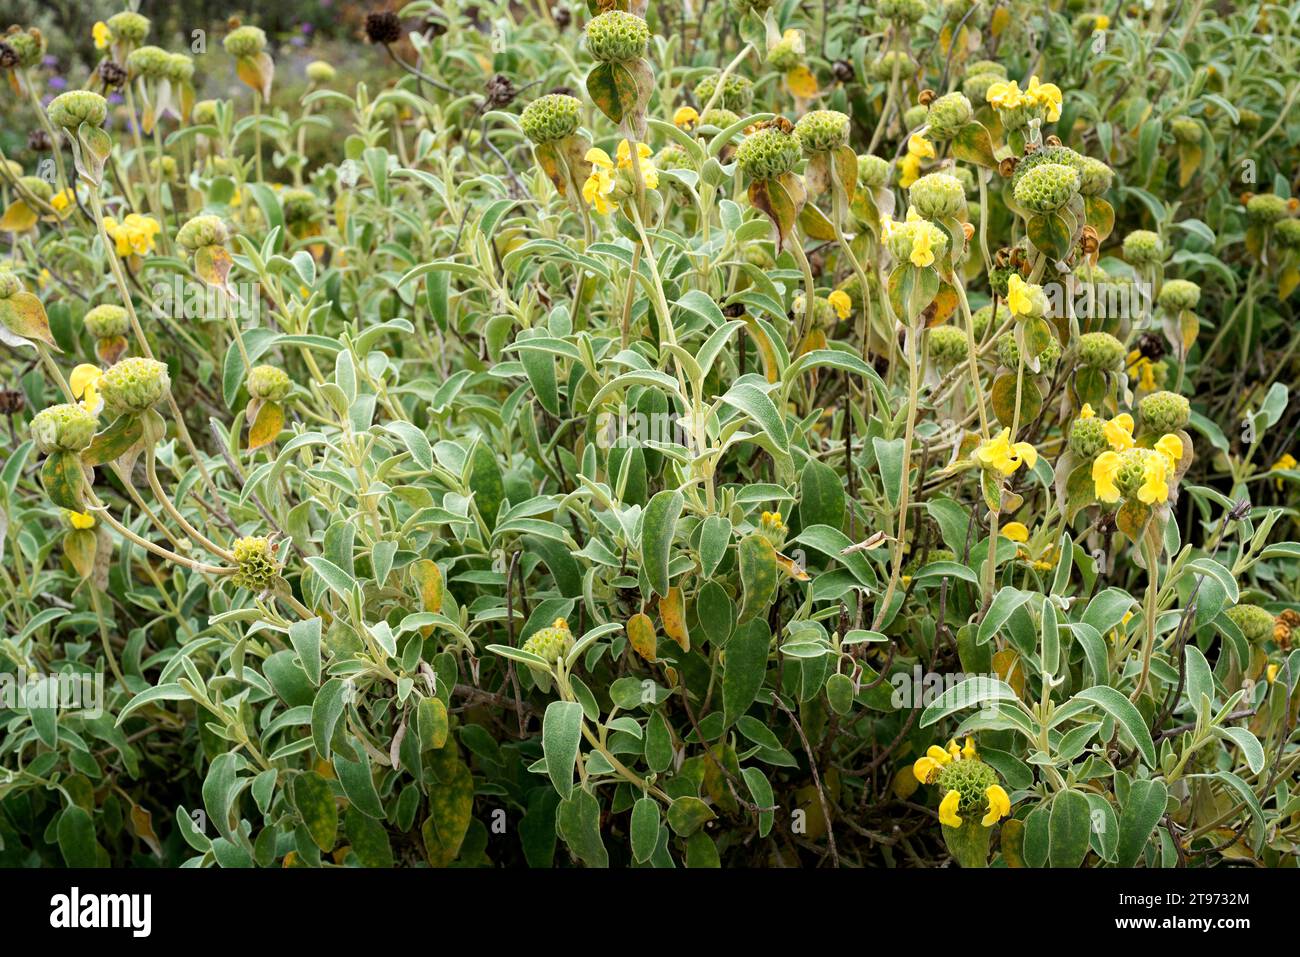 Jerusalem sage (Phlomis fruticosa) is an evergreen shrub native to eastern Mediterranean region, from Italy to Greece and Turkey. Stock Photo